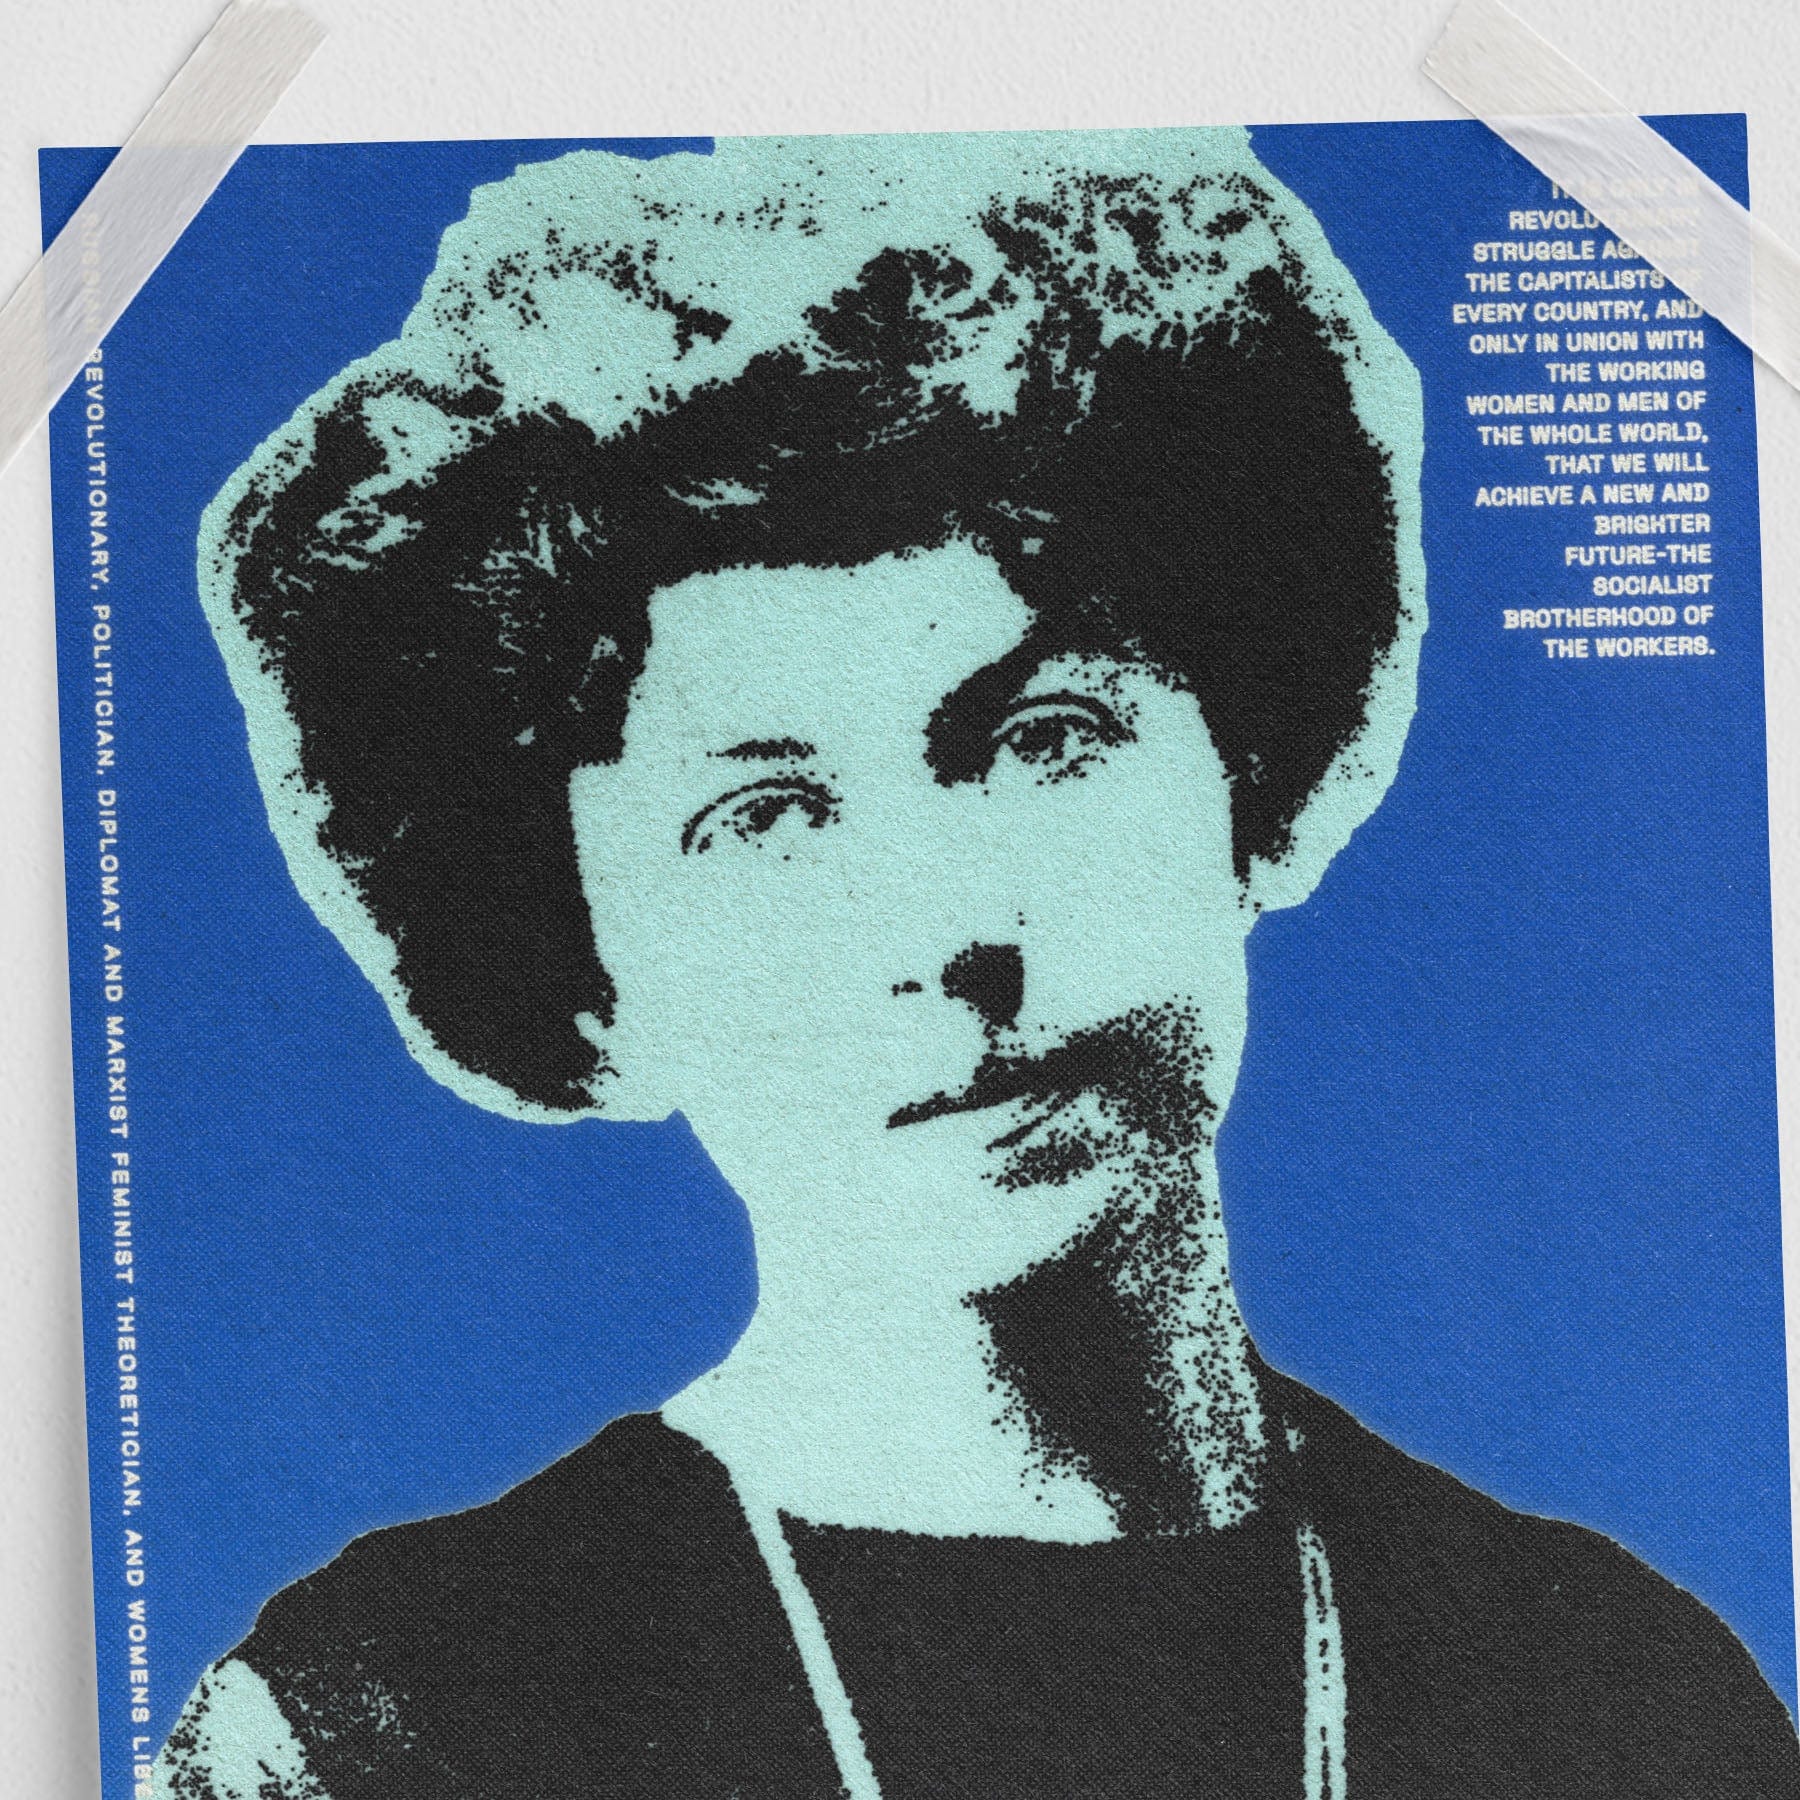 Alexandra Kollontai (11 x 17 Poster print)